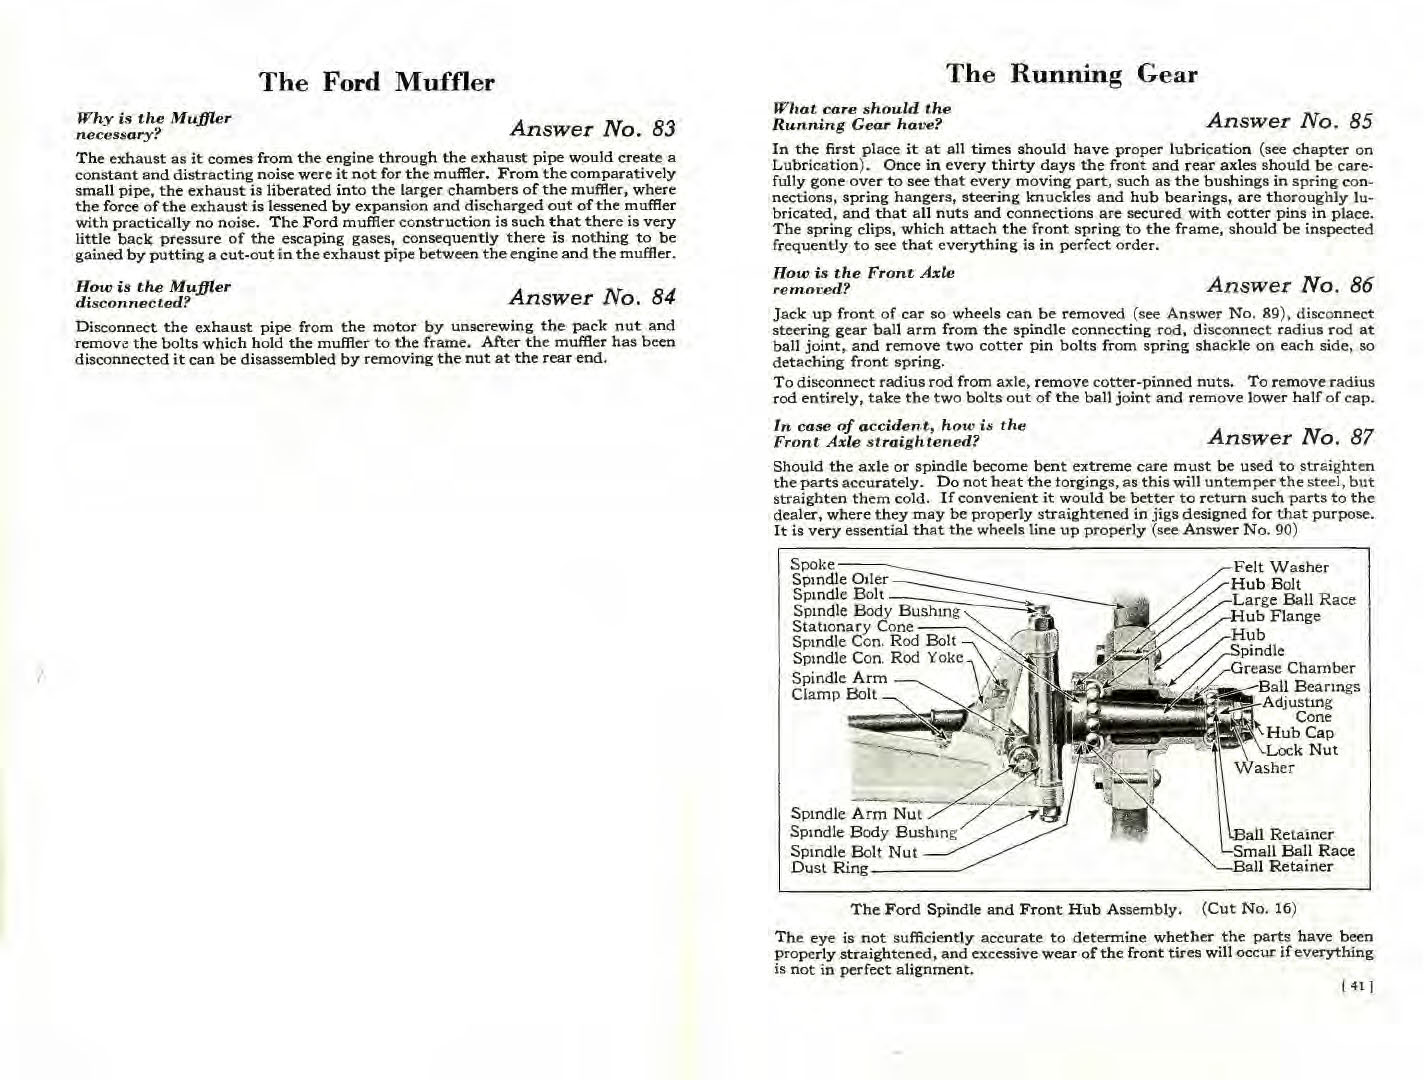 n_1922 Ford Manual-40-41.jpg